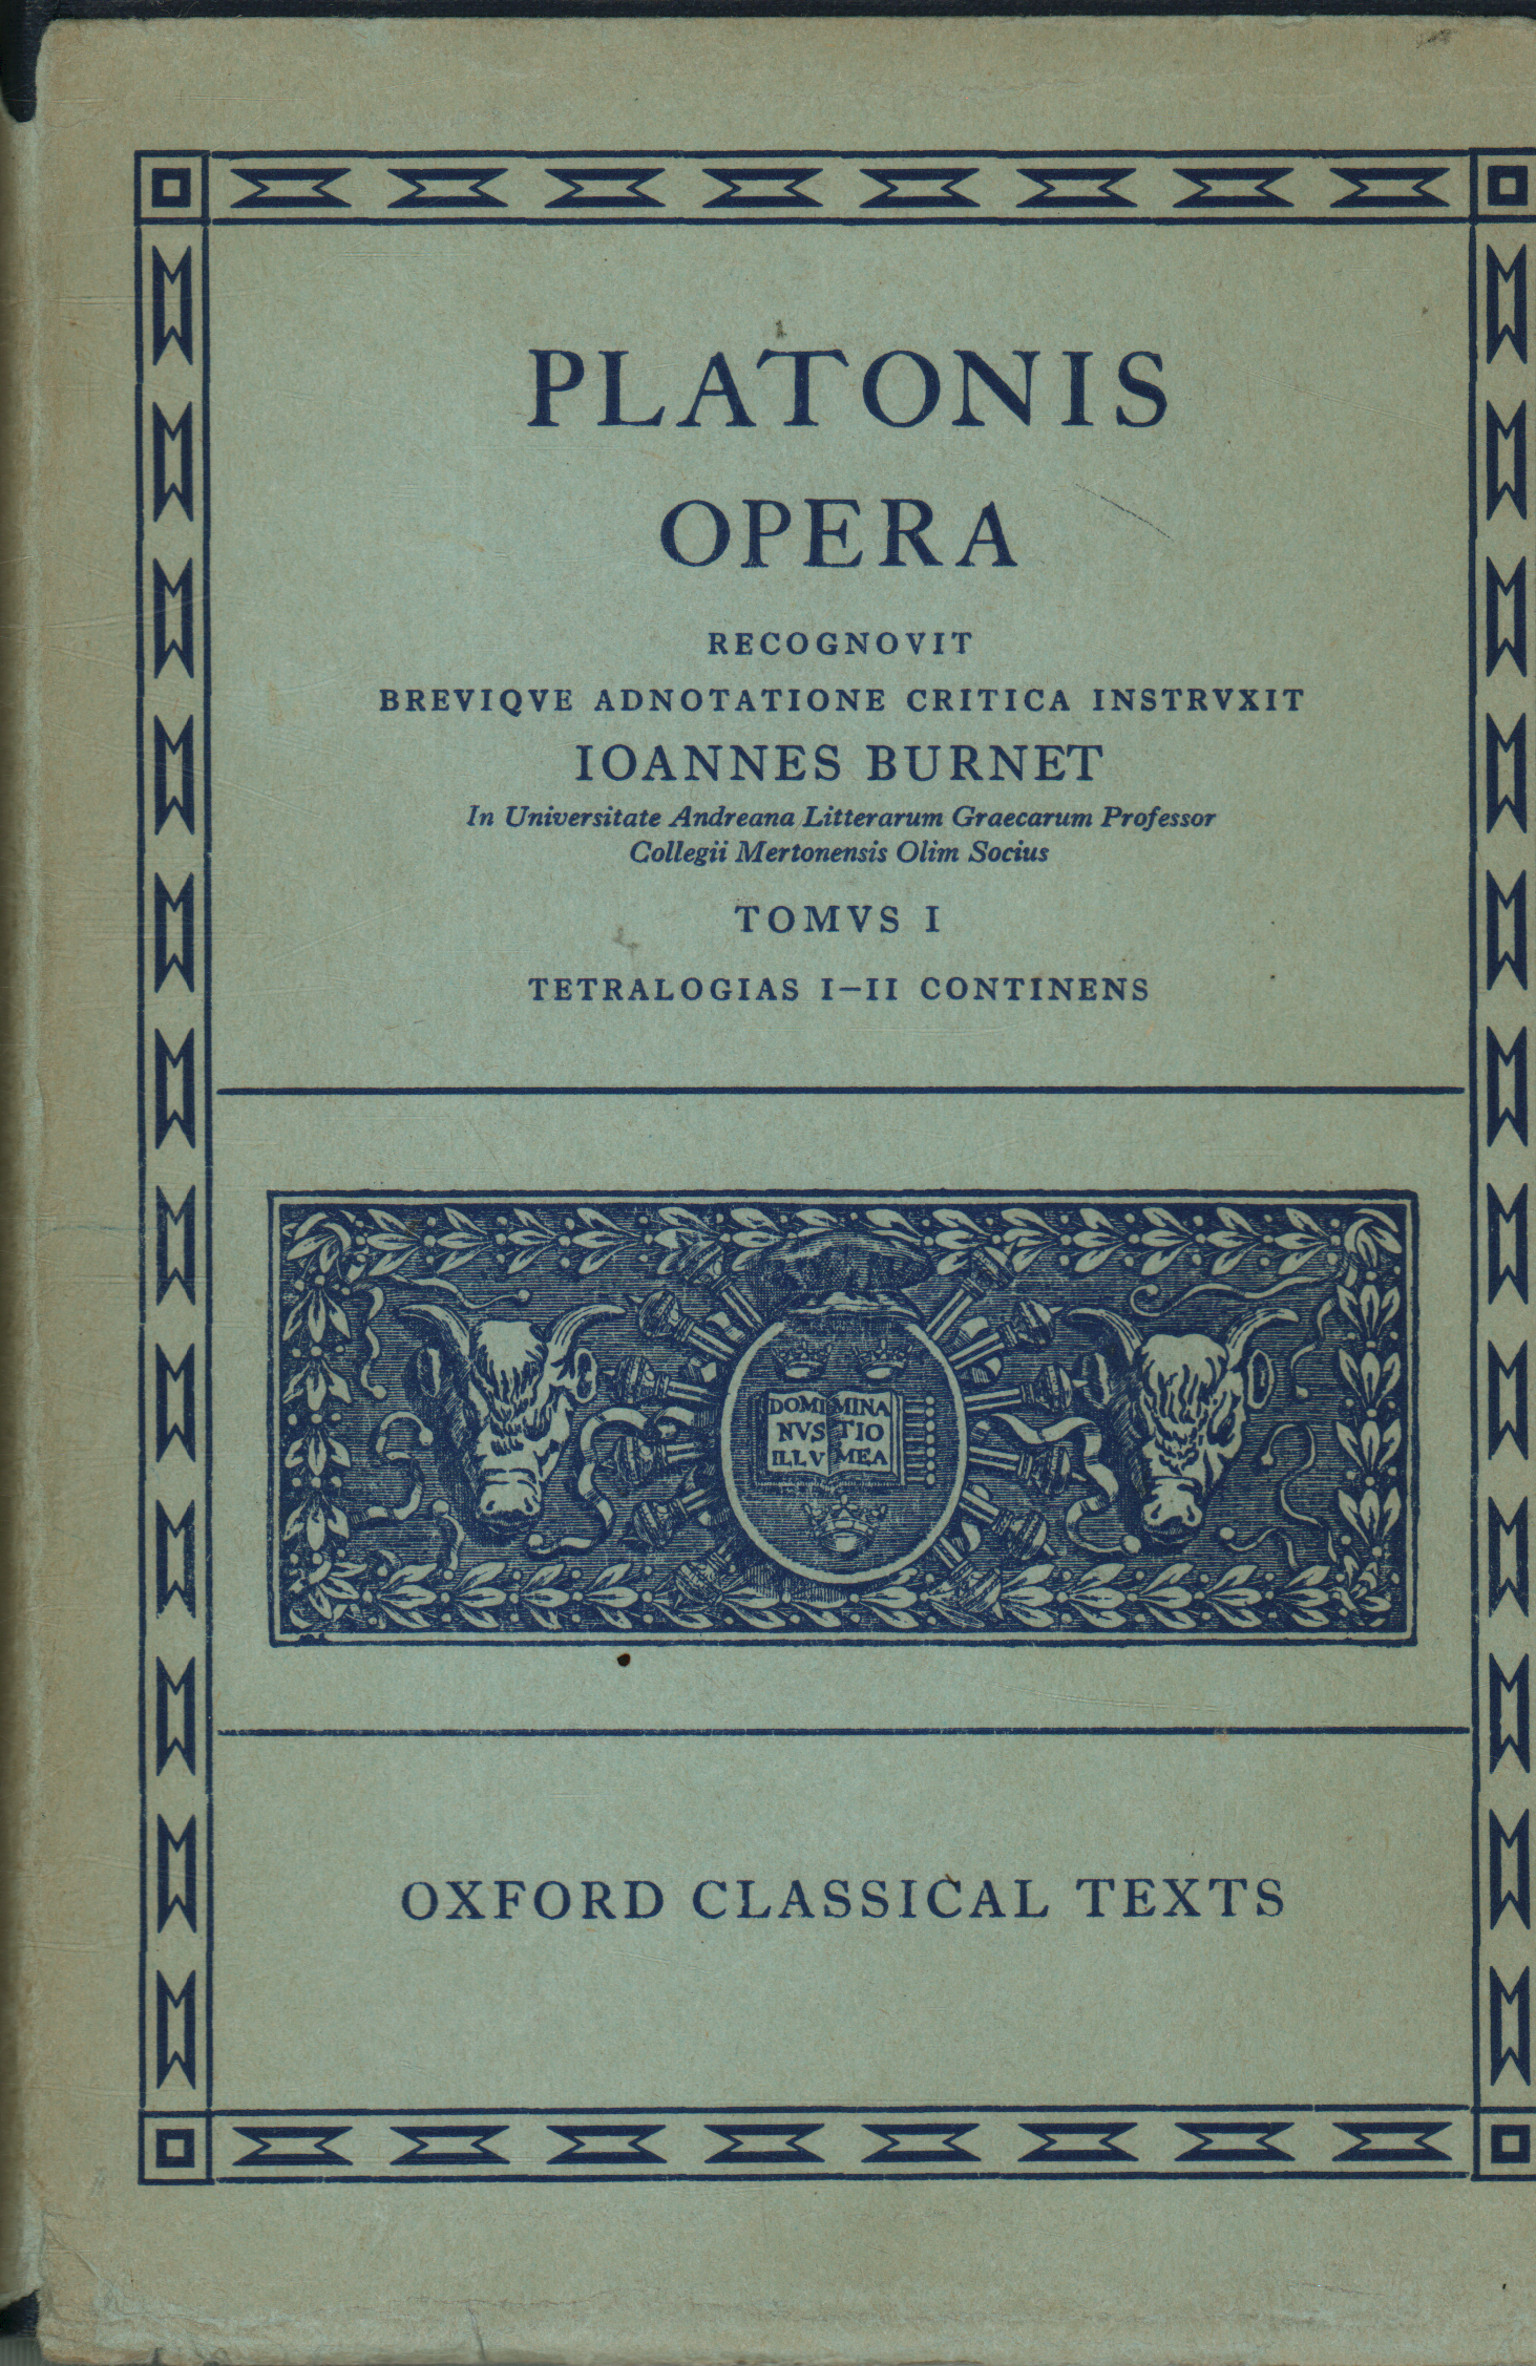 Platonis Opera. Tomus I.Tétralogies I-II continen, Platonis